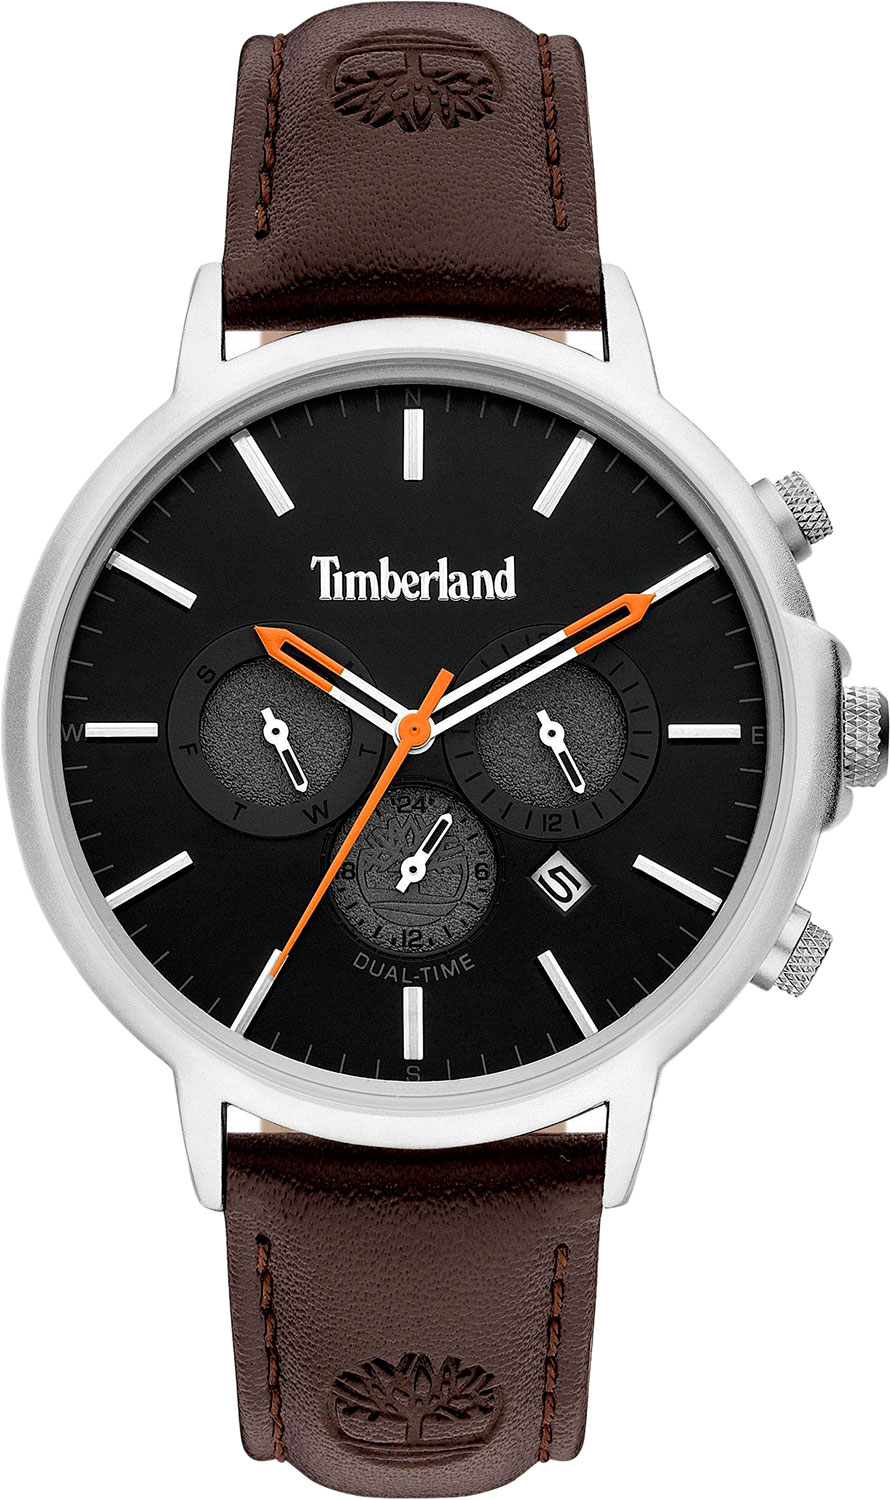 Фото - Мужские часы Timberland TBL.15651JYS/02 мужские часы timberland tbl 15954jys 02mm